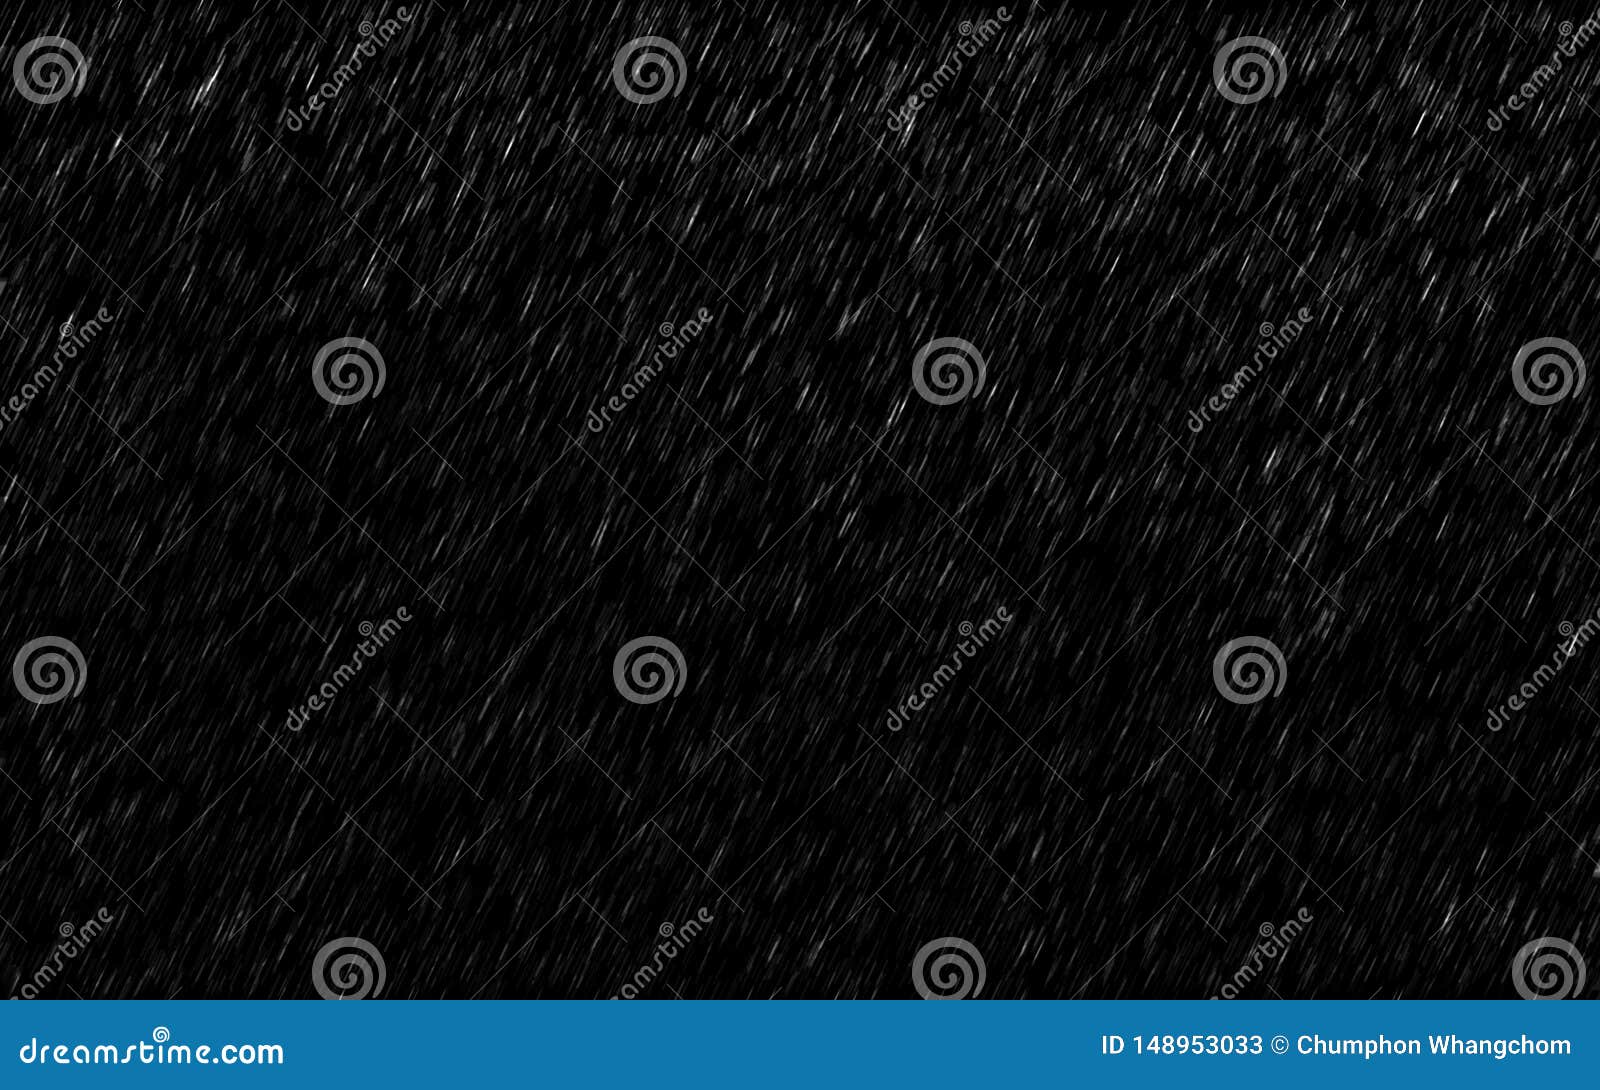 falling raindrops  on dark background. heavy rain and weather storm in raining season